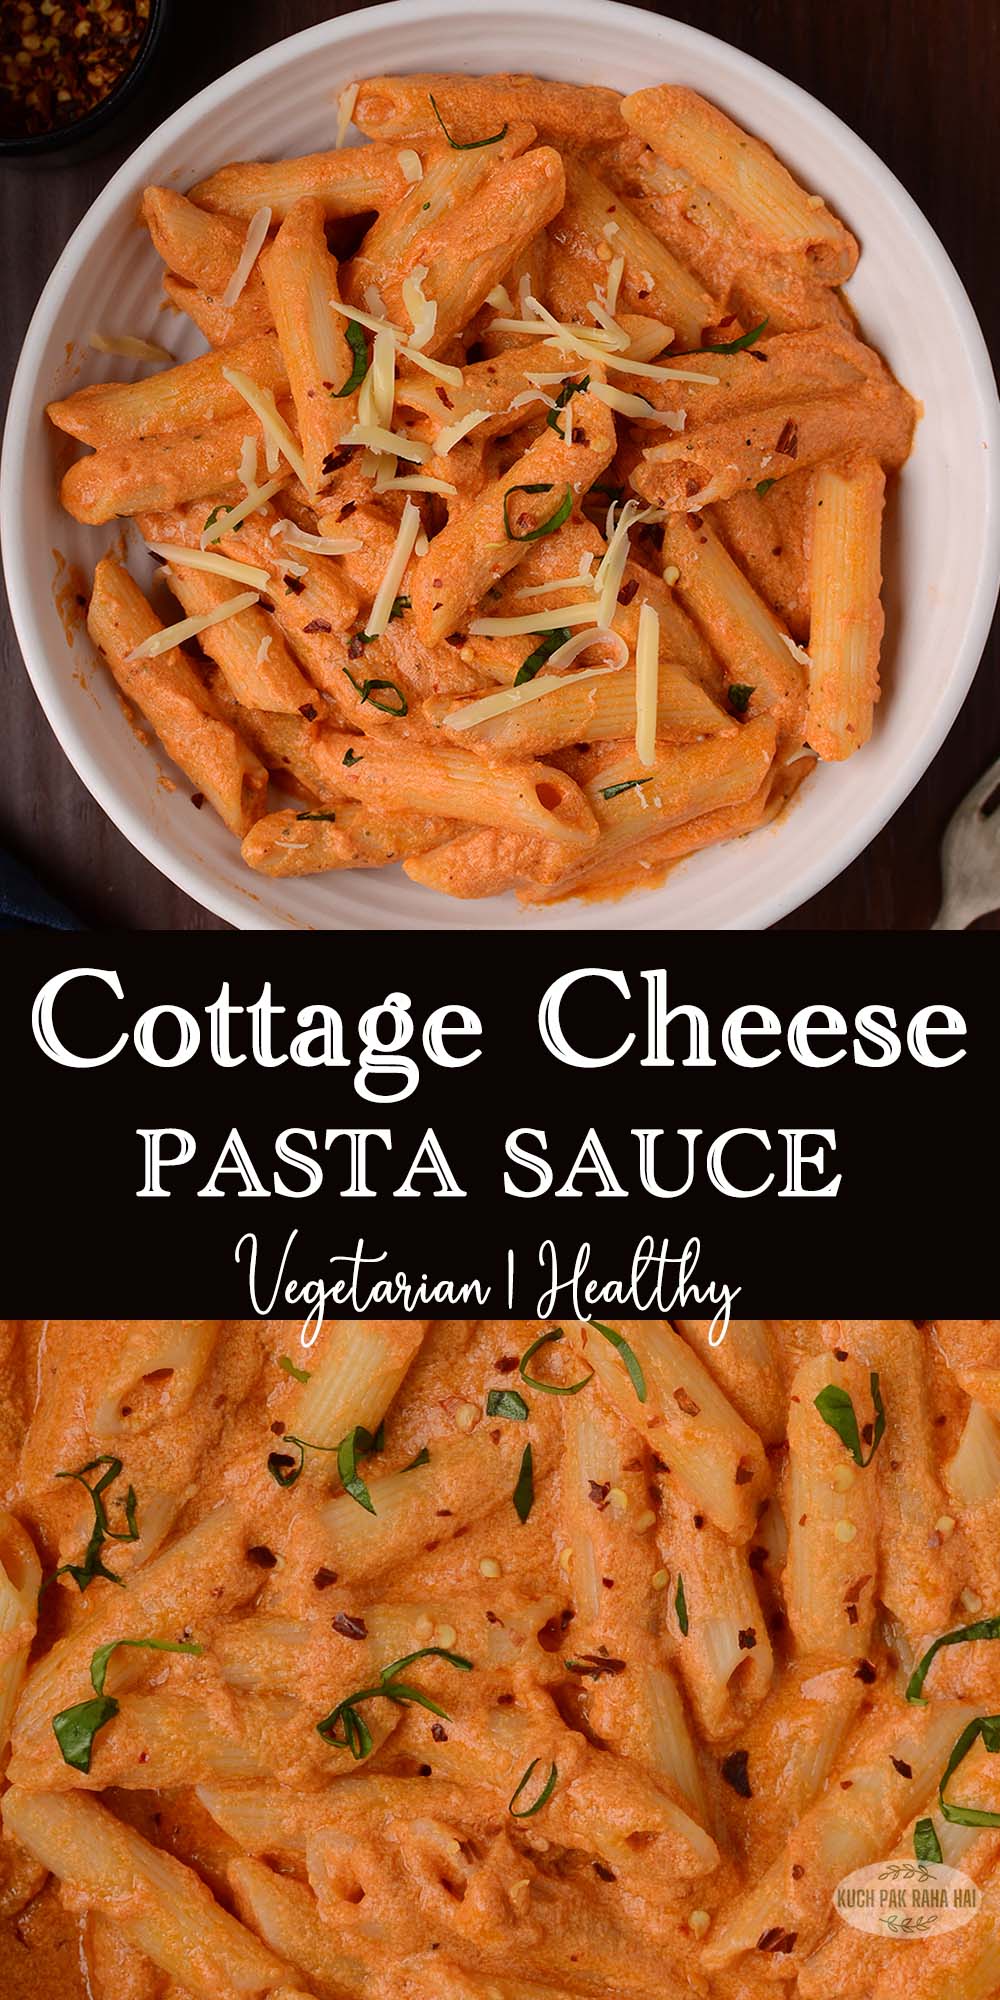 Cottage cheese pasta sauce recipe.